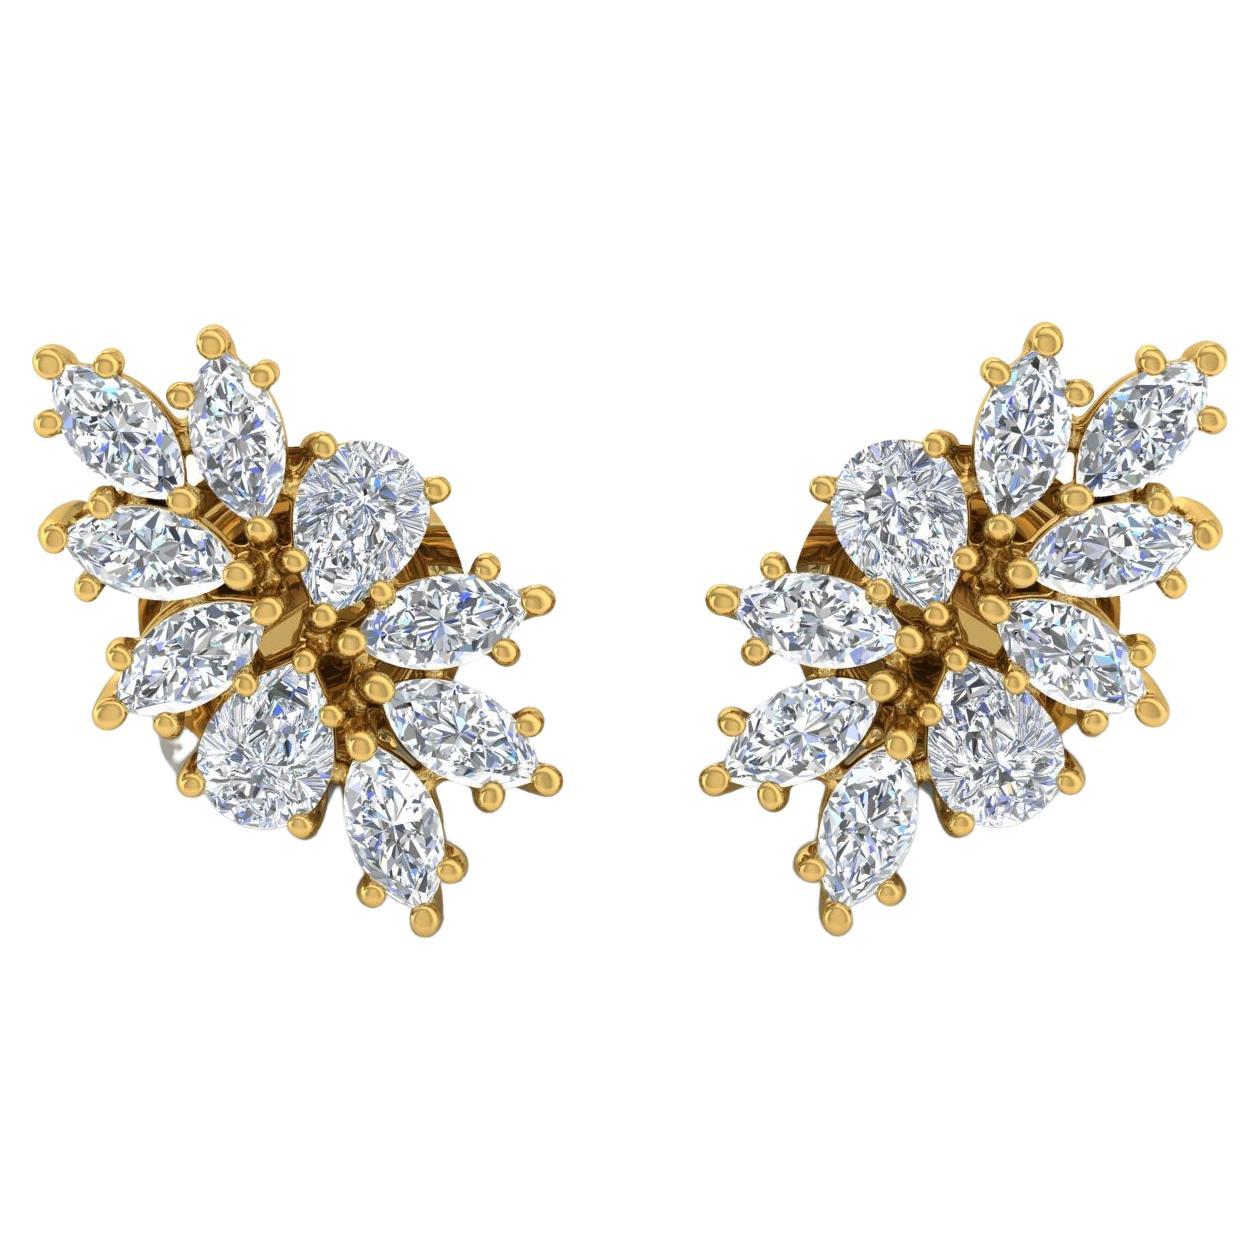 1.85 Carat Marquise Pear Diamond Earrings 18 Karat Yellow Gold Handmade Jewelry For Sale